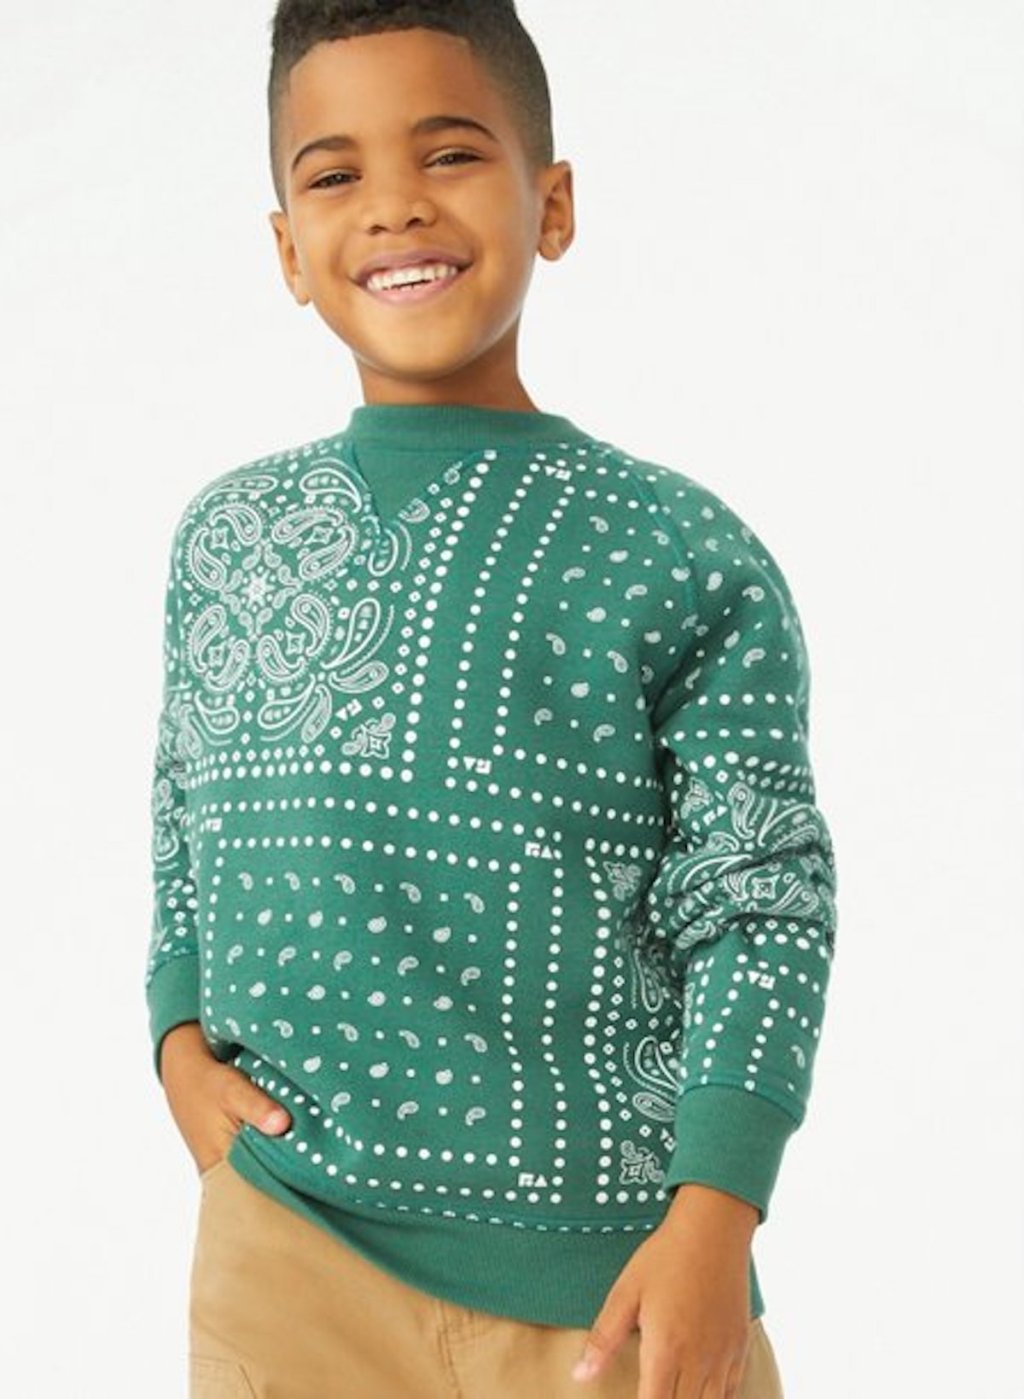 stock photo of boy wearing green sweater